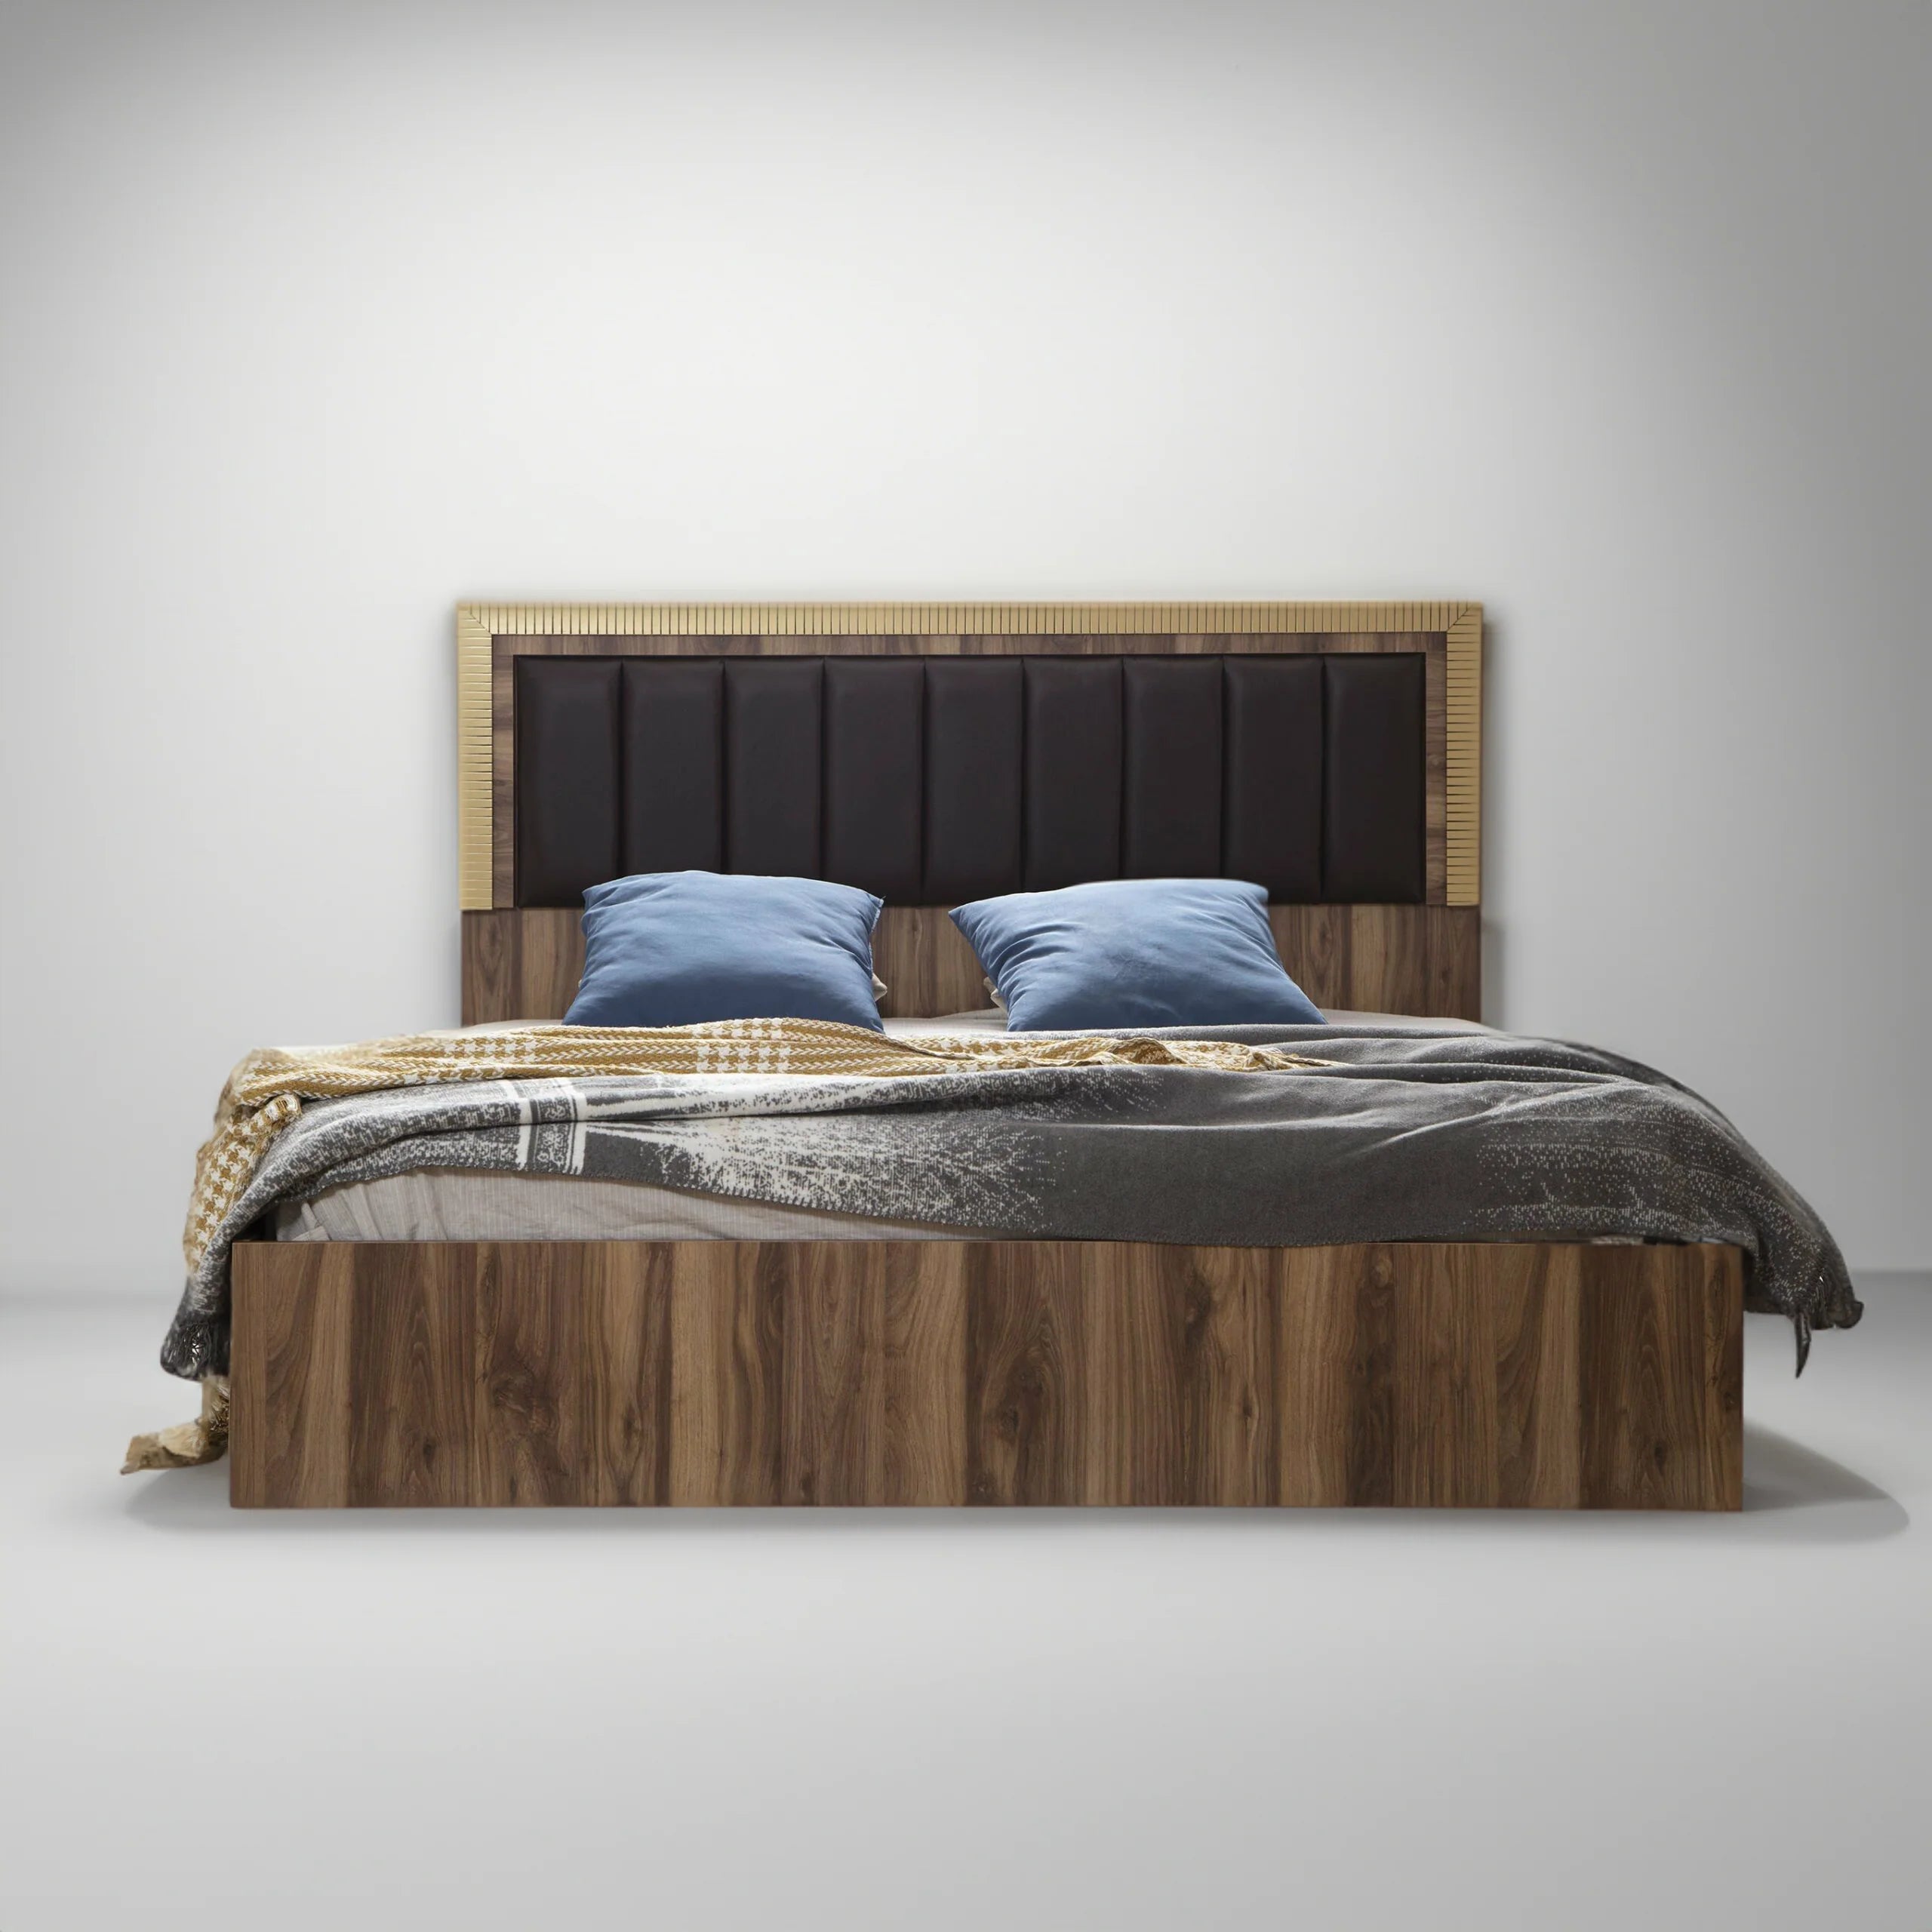 Schlafzimmer Set Holz